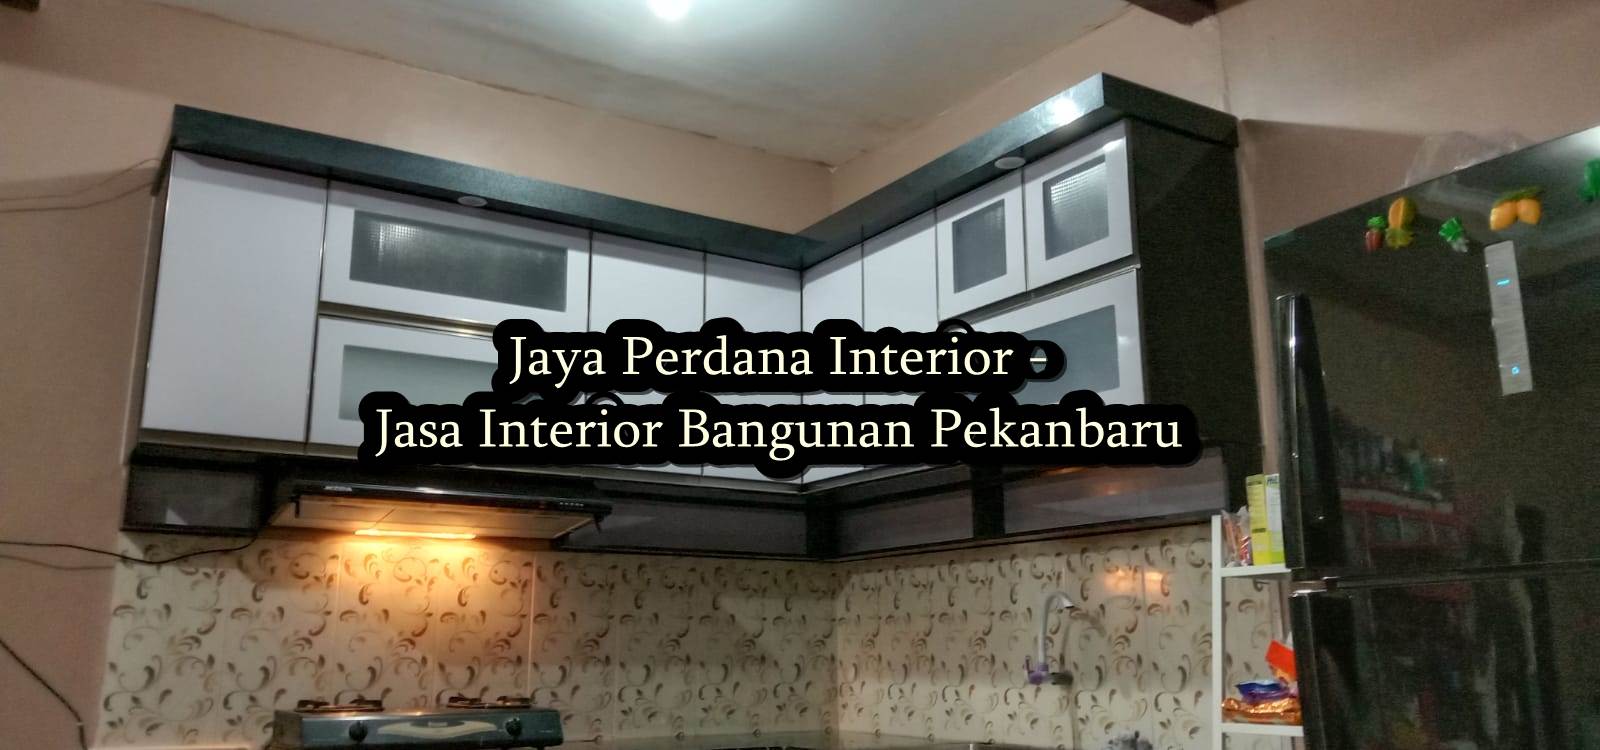 Jaya Perdana Interior - Jasa Interior Bangunan Pekanbaru